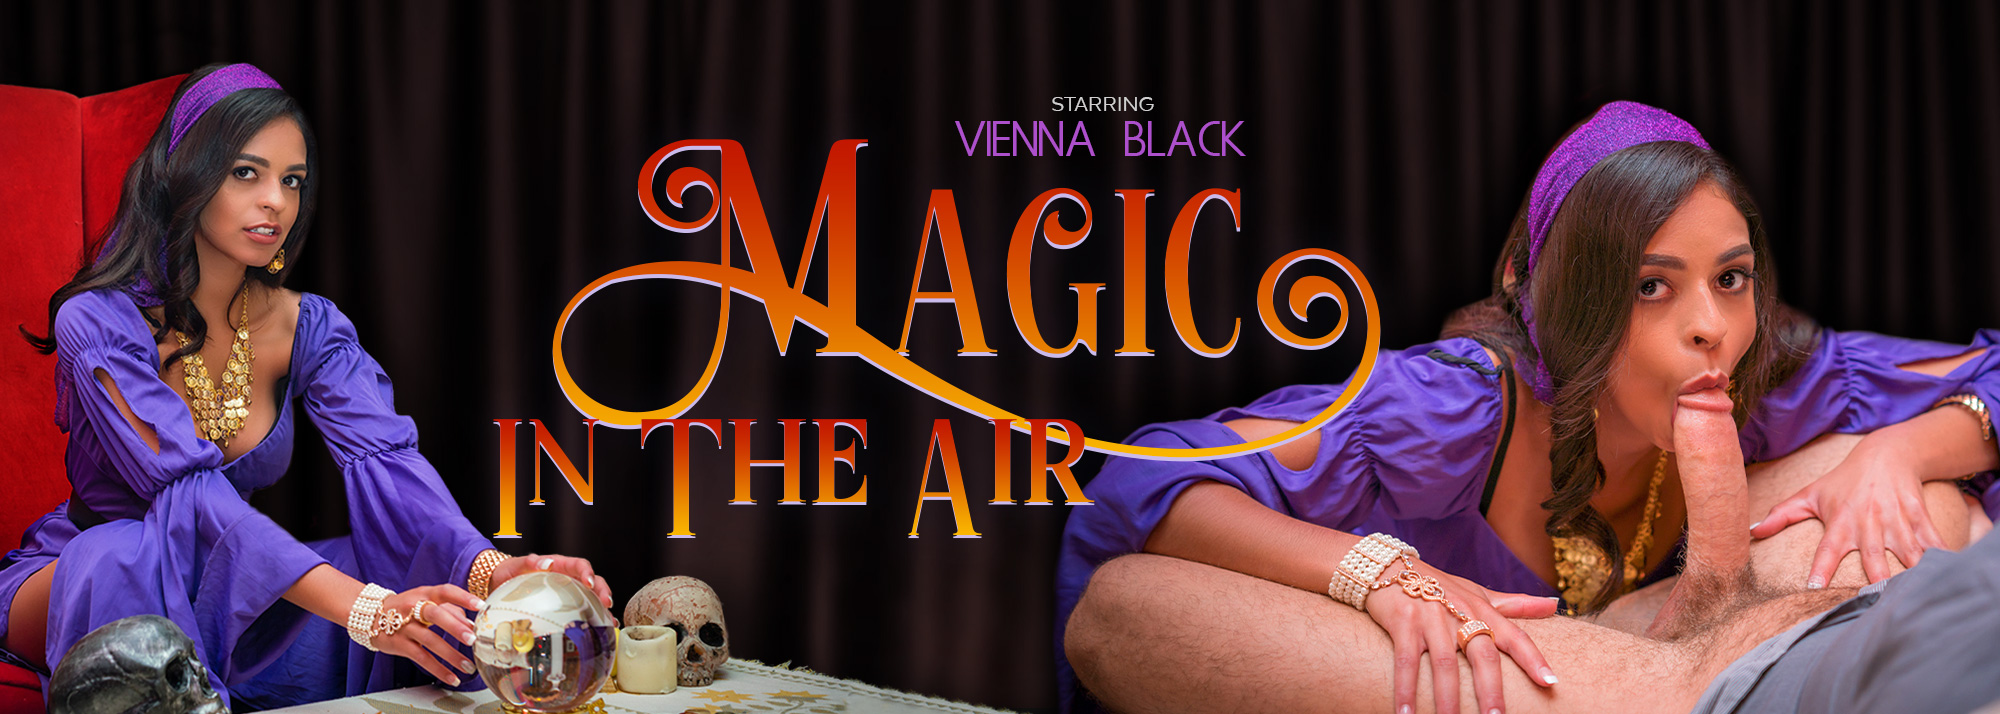 Magic In The Air - VR Porn Video, Starring Vienna Black VR